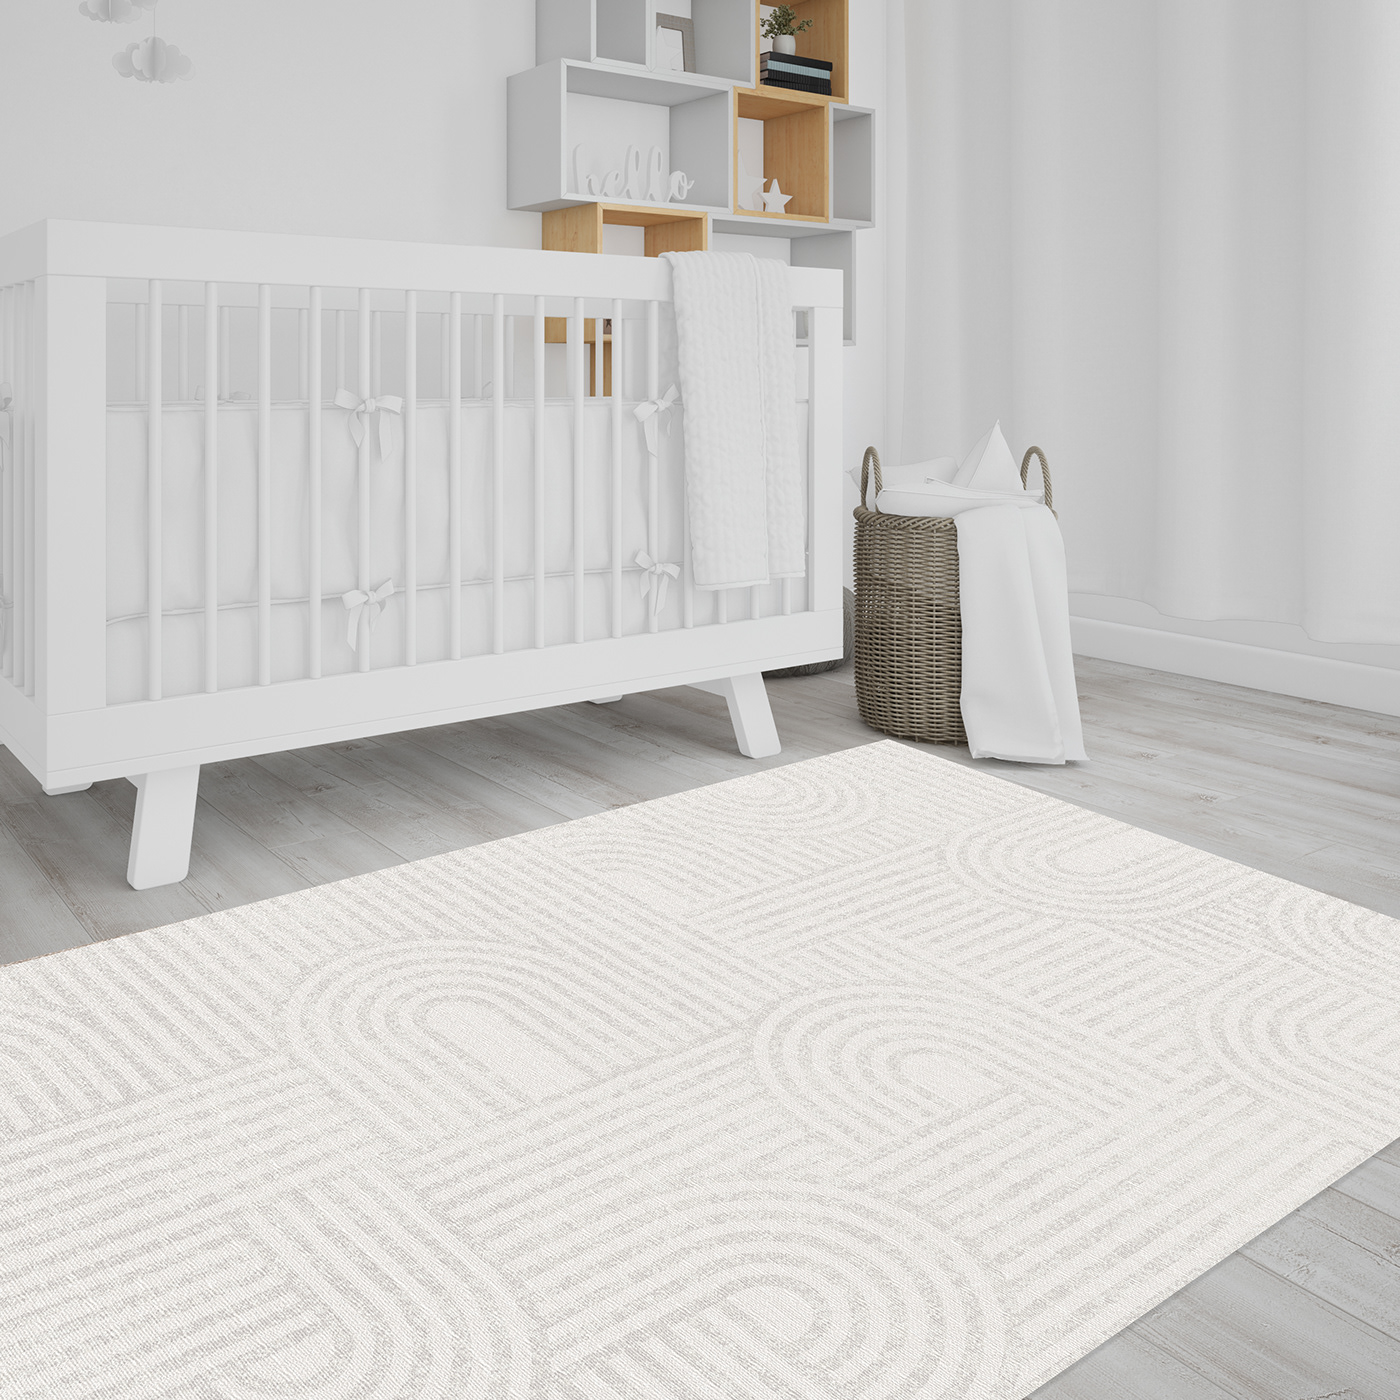 BABY MAT playmat pattern design  Rug textile design  Surface Pattern print babyroom kidsroom modern